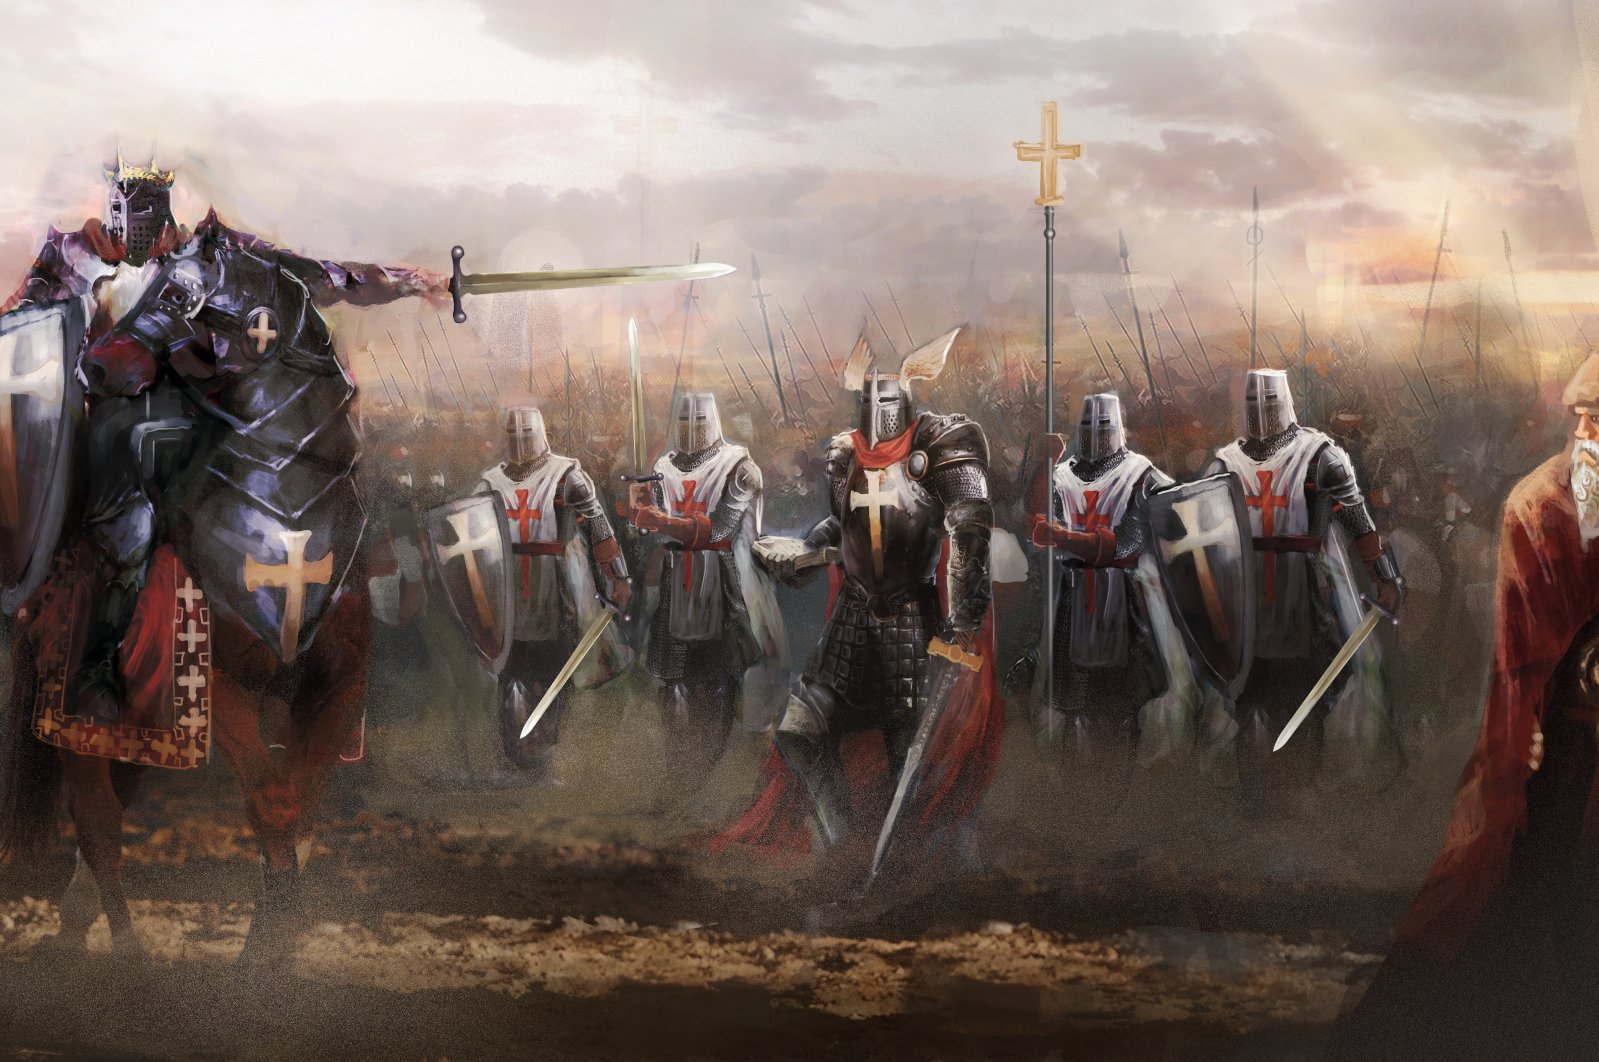 An illustration of the Knights Templar. (Shutterstock)